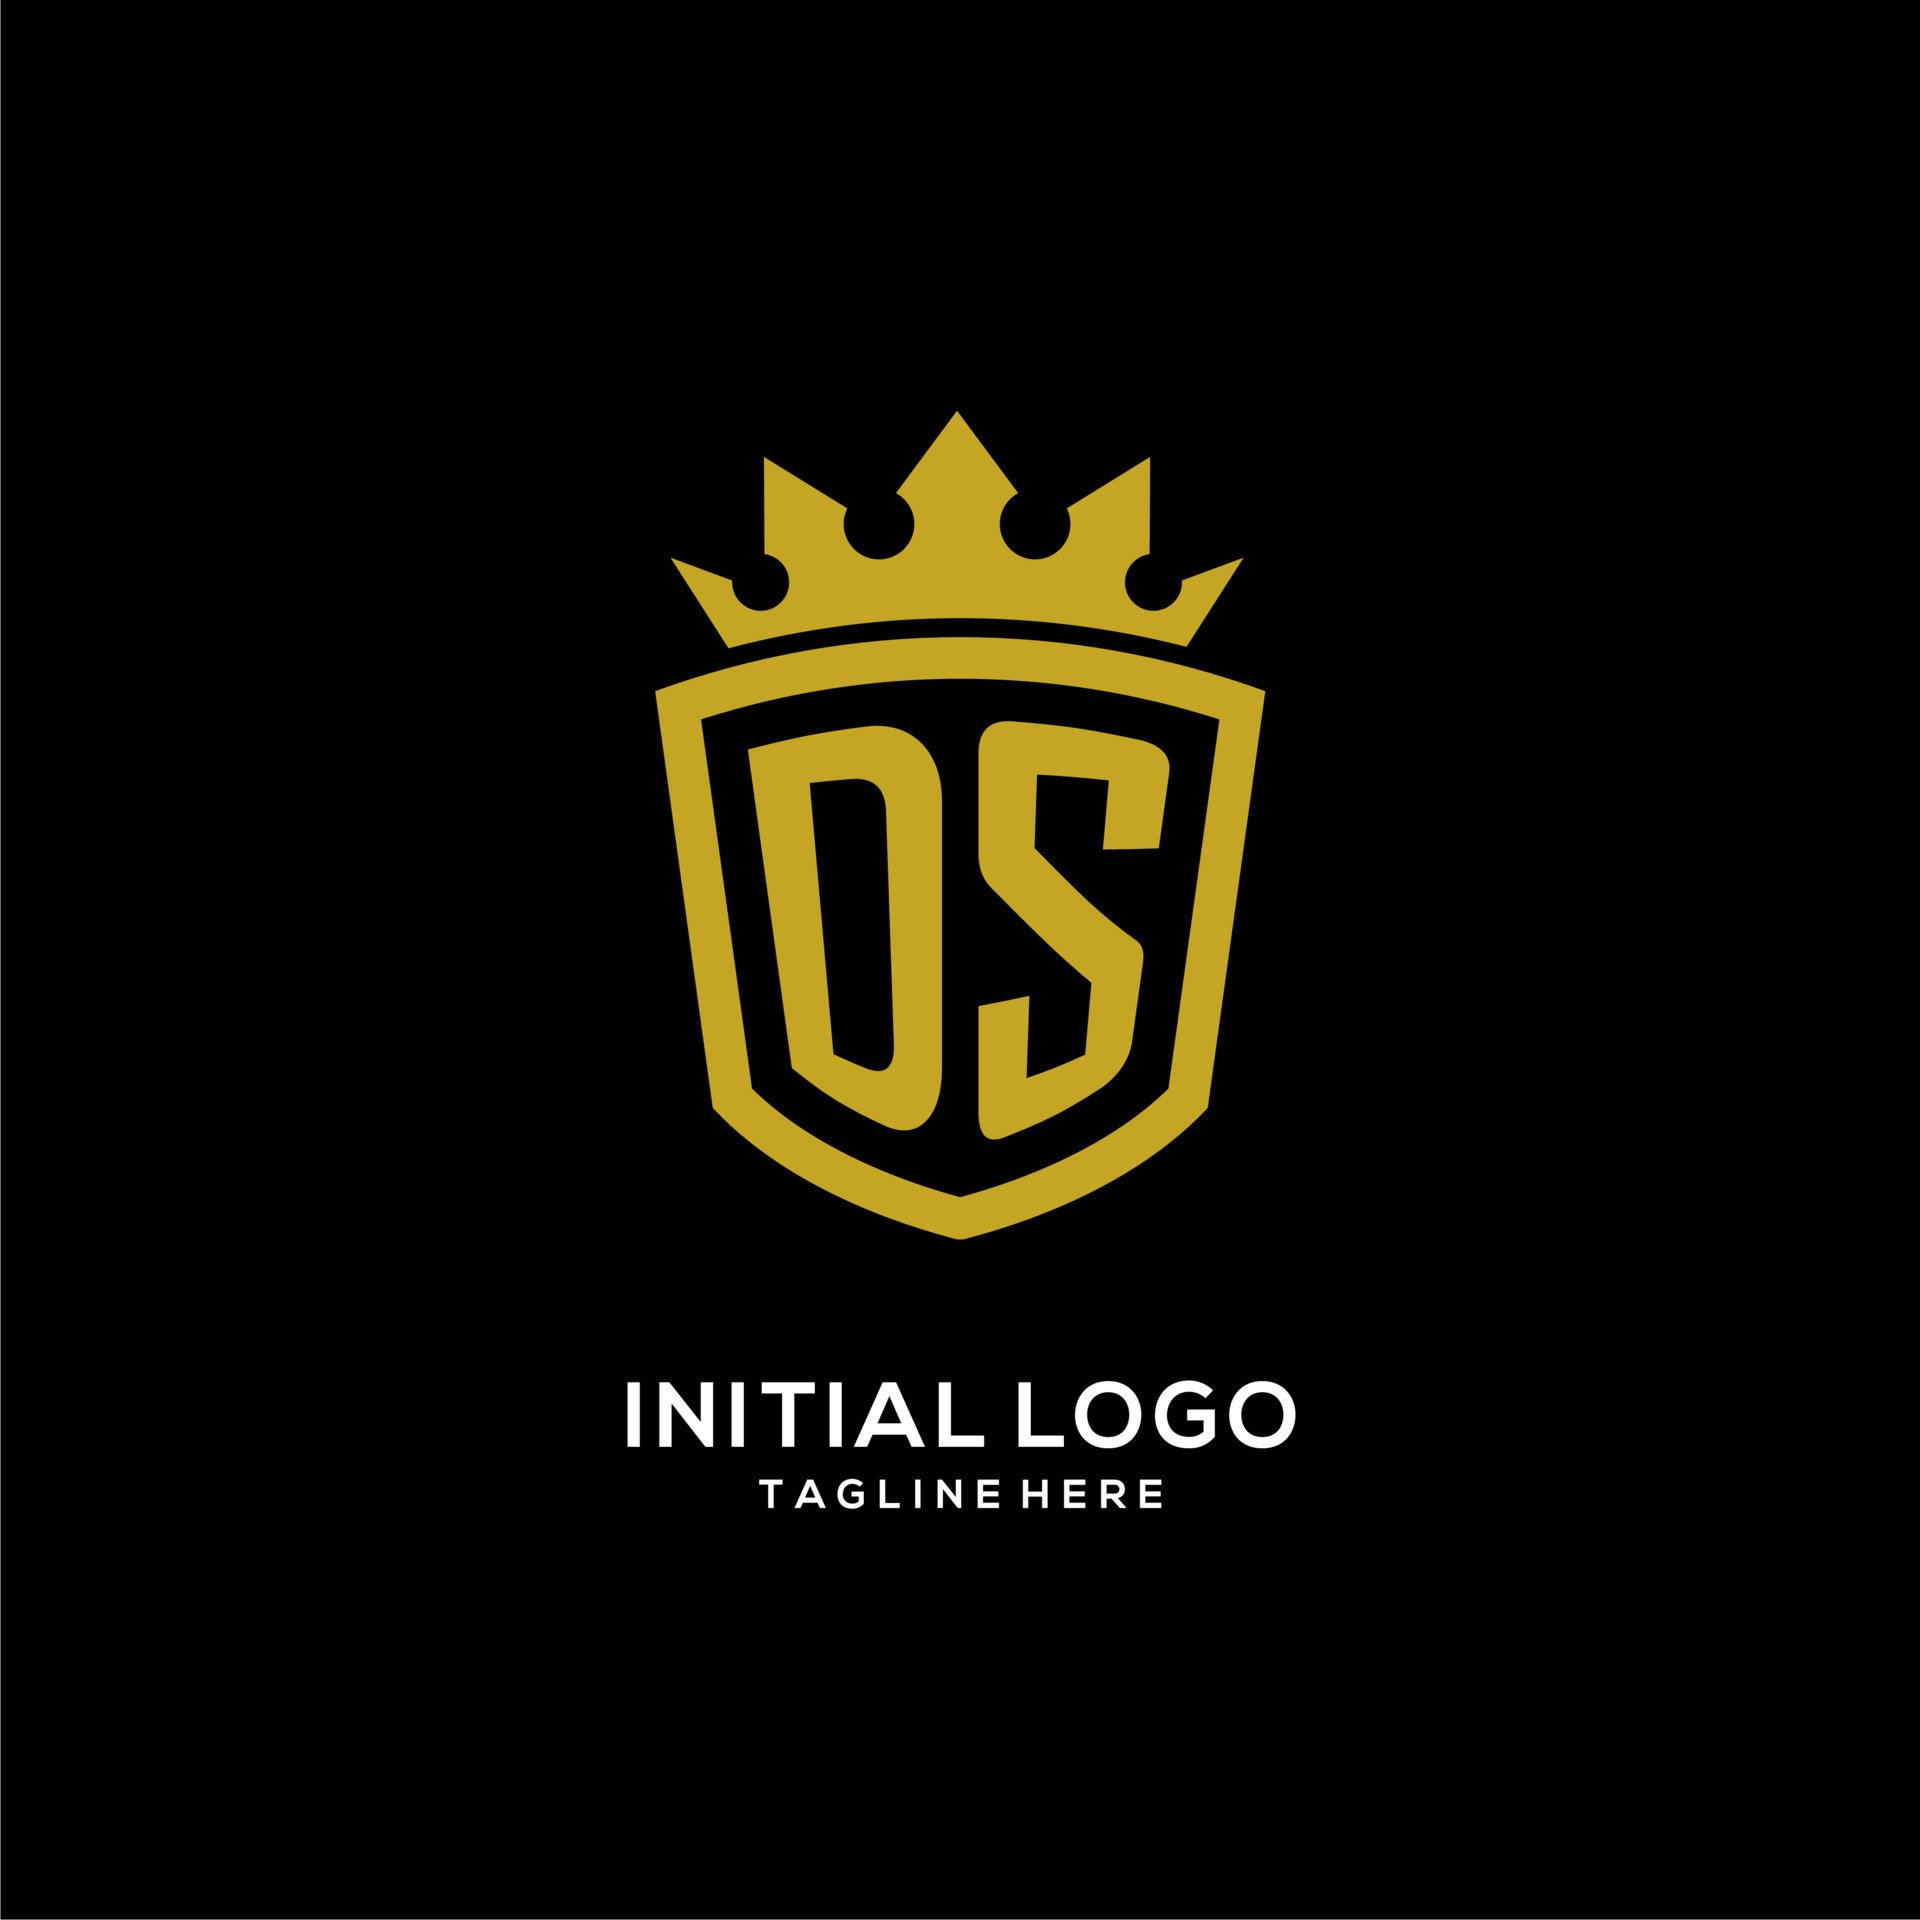 DS logo emblem sign Stock Photo - Alamy